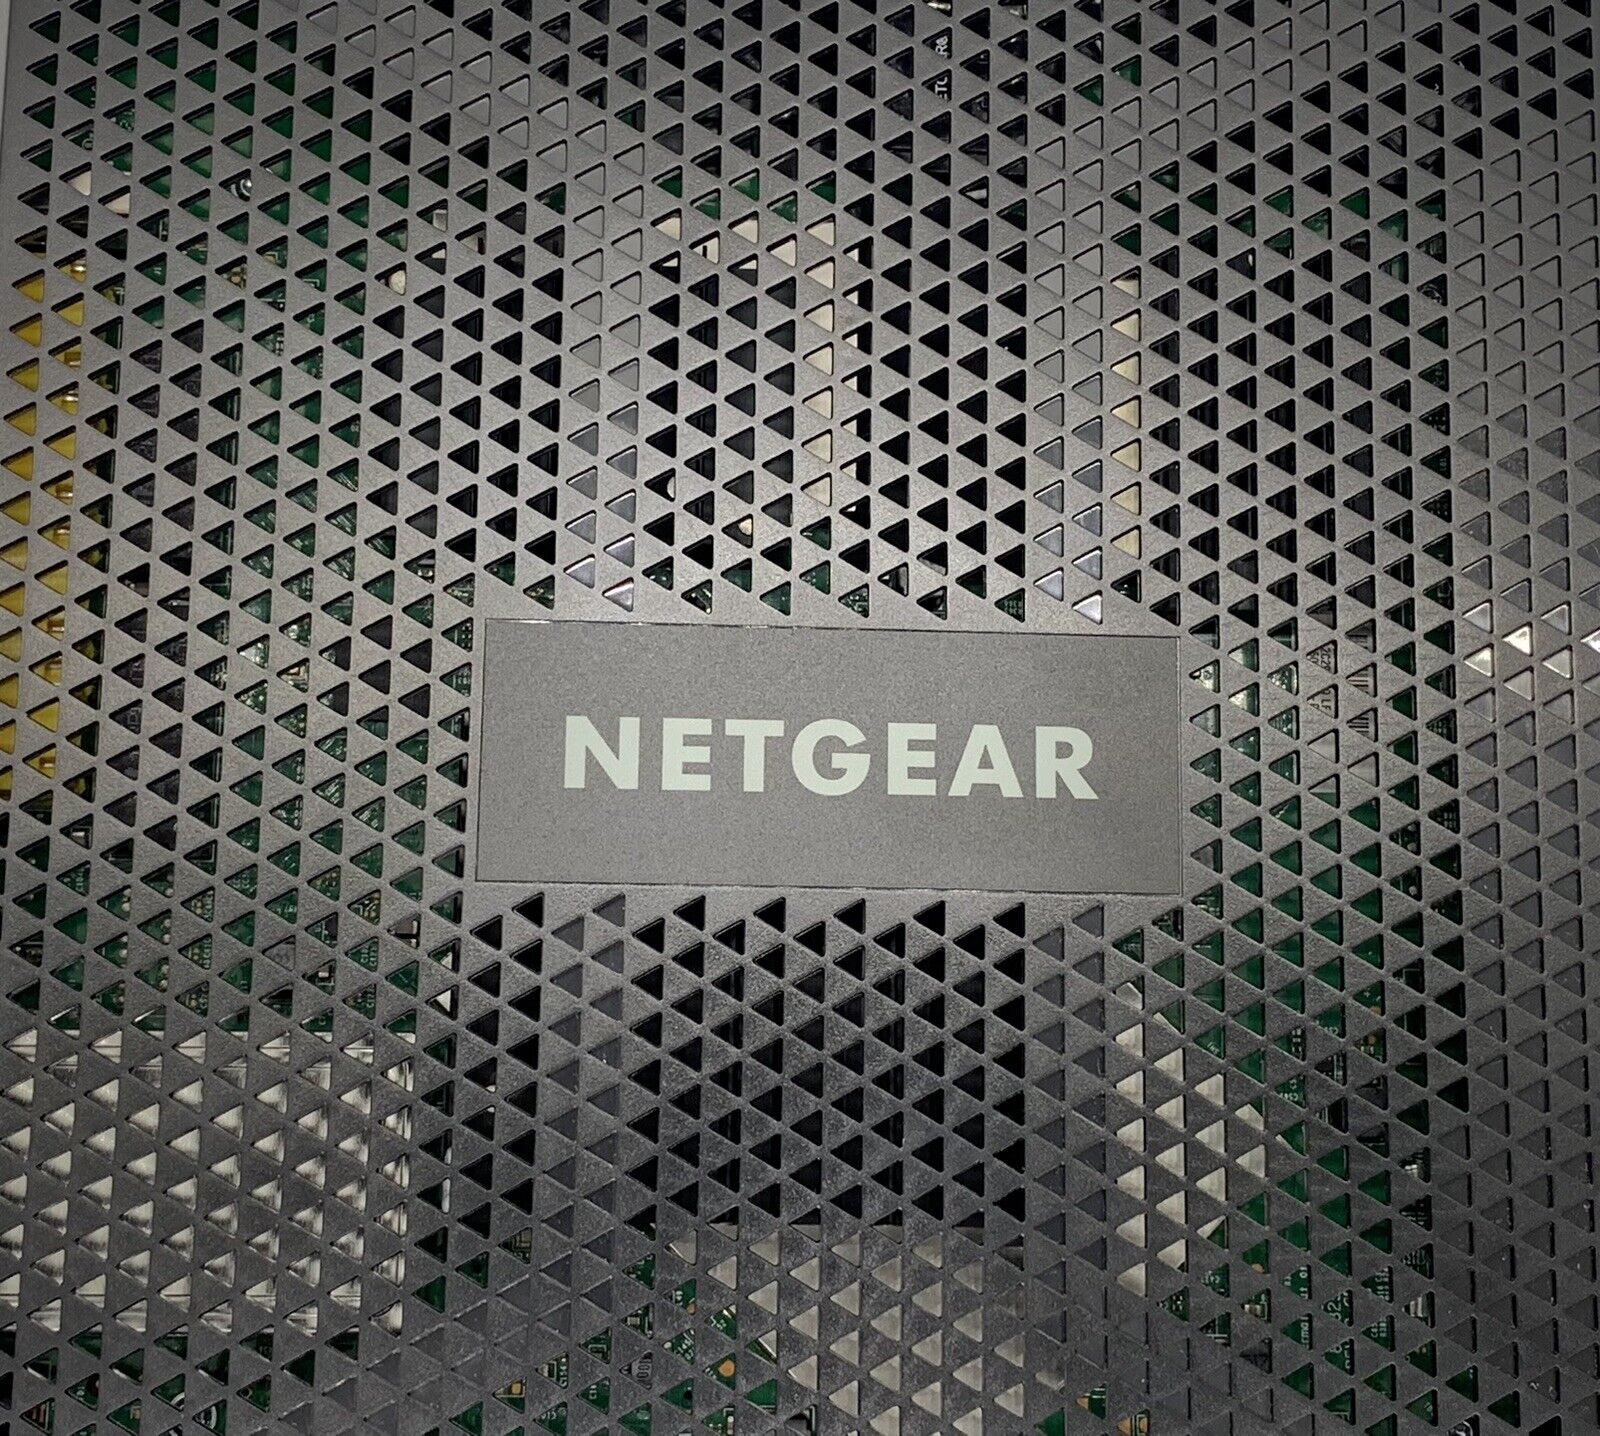 NETGEAR Nighthawk C7000v2 AC1900 Wi-Fi Cable Modem Router 